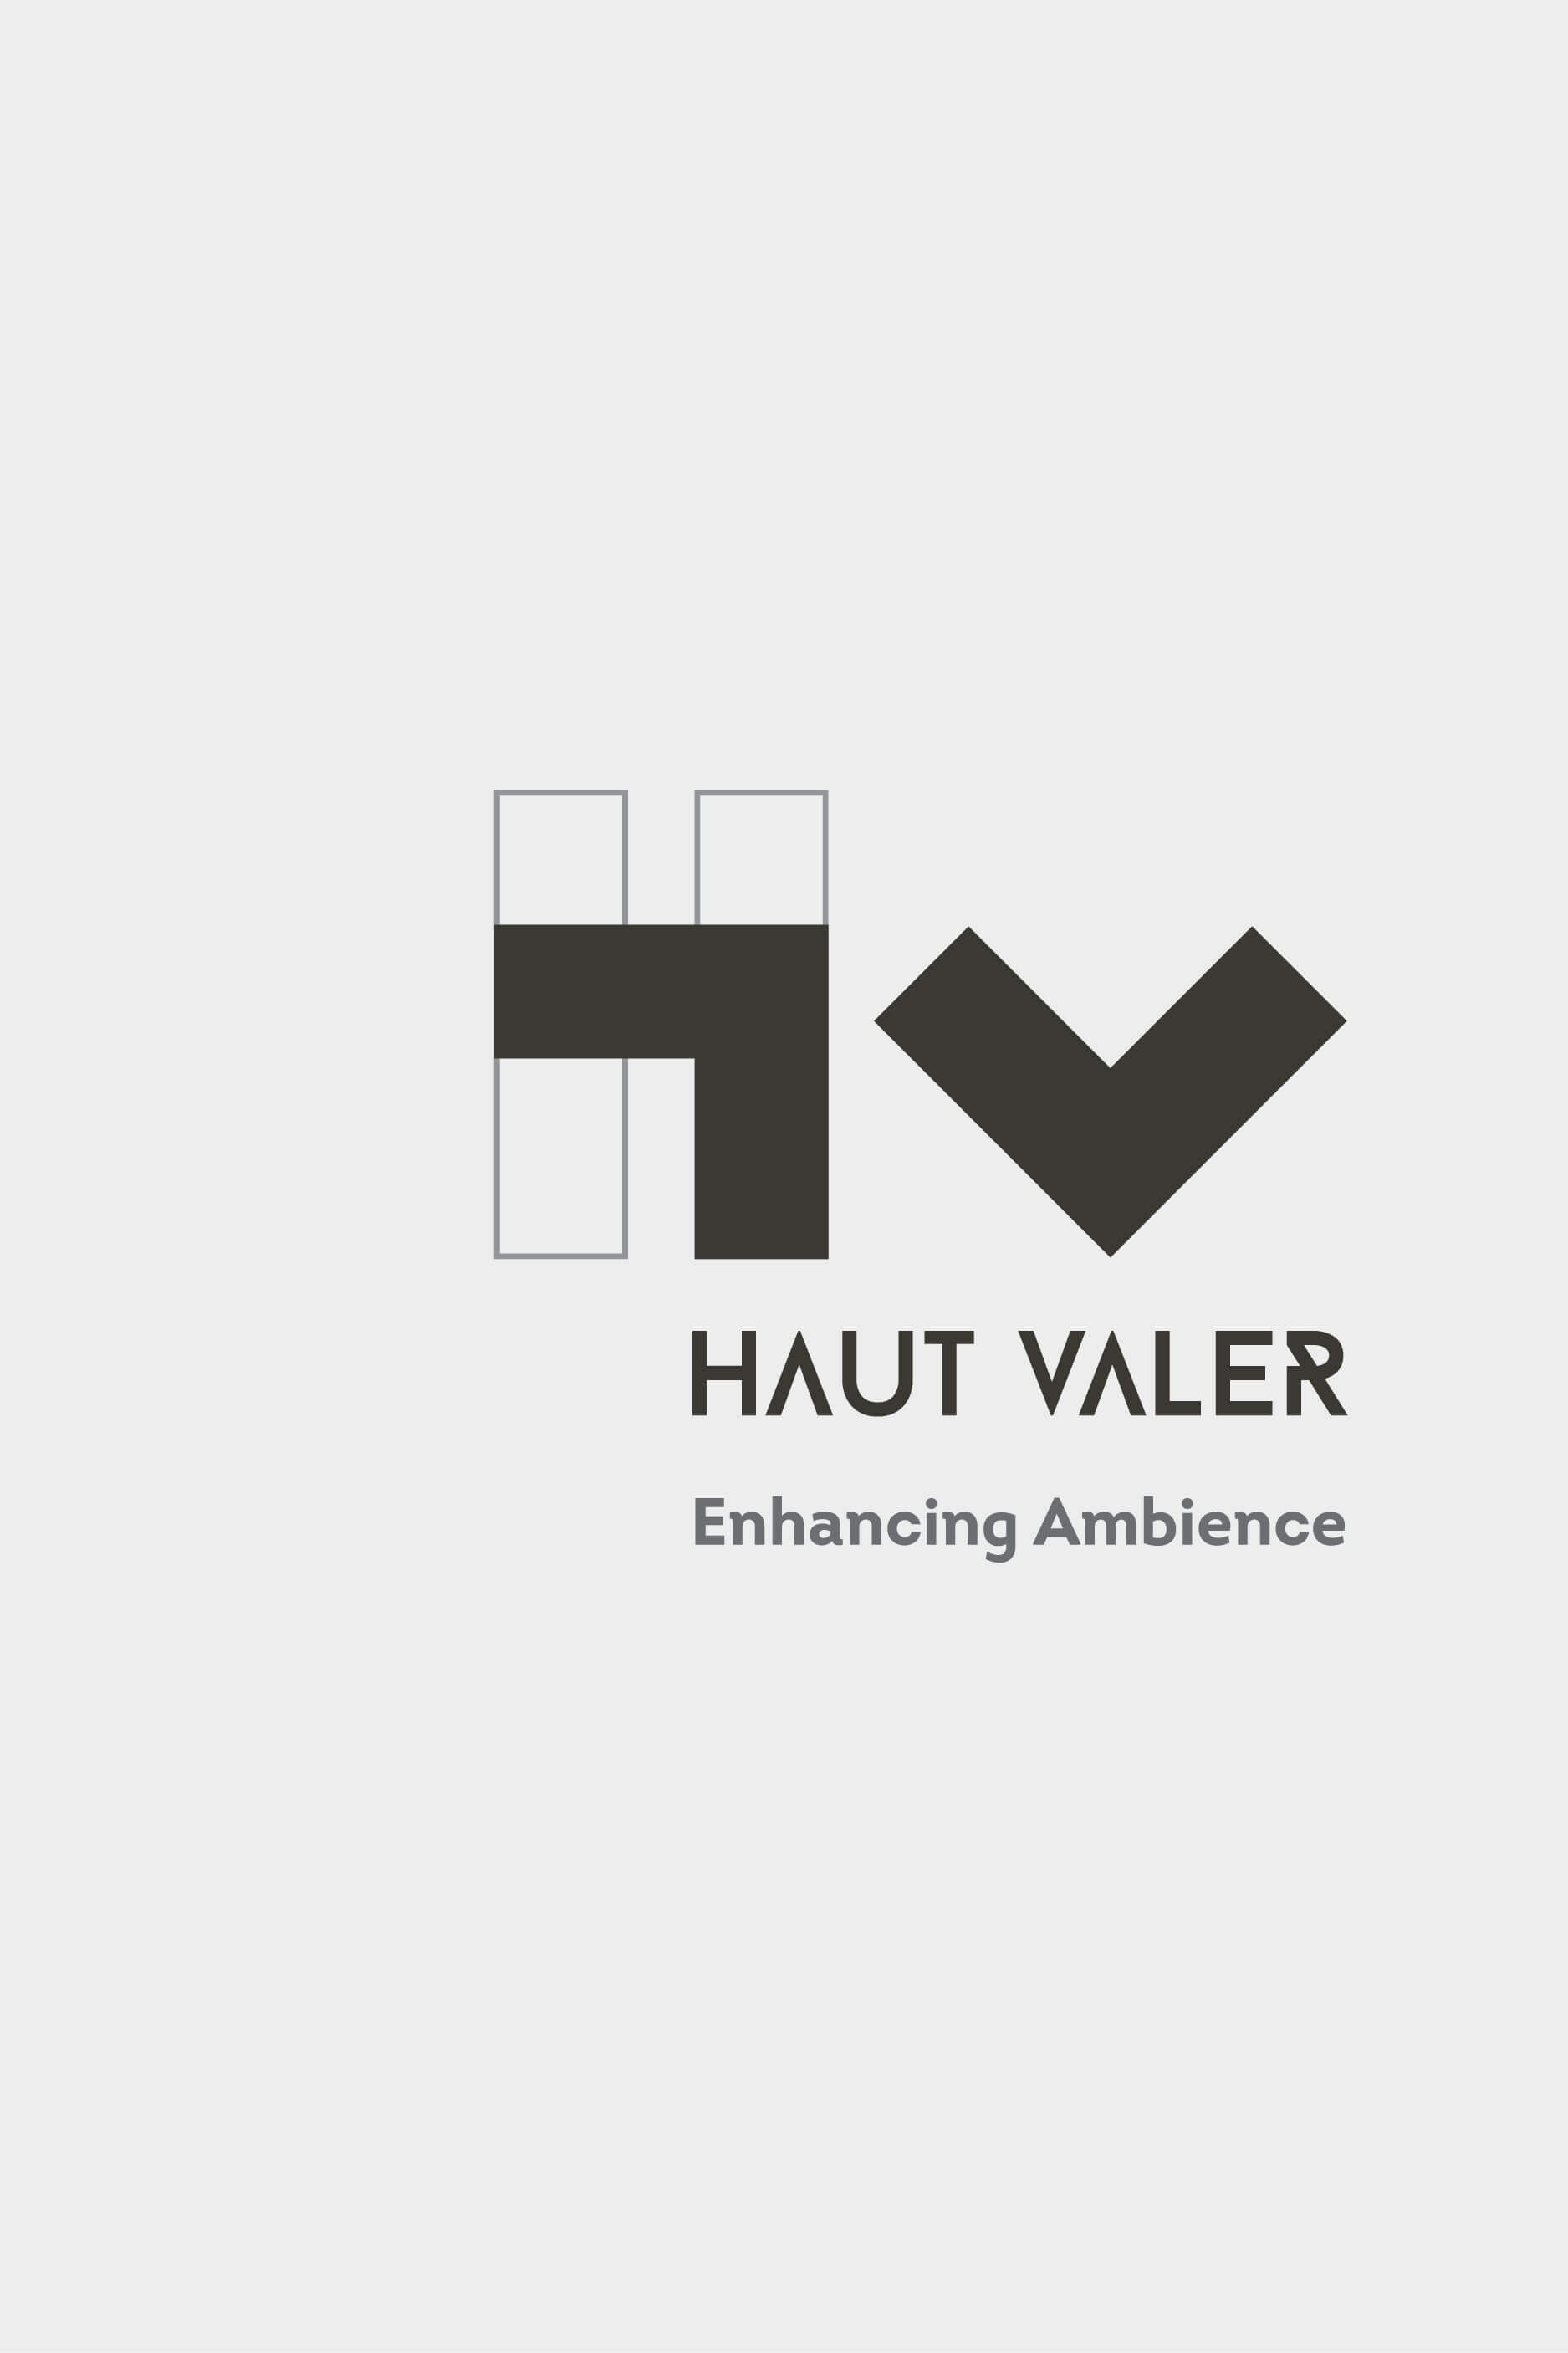 HAUT VALER - Brand Identity